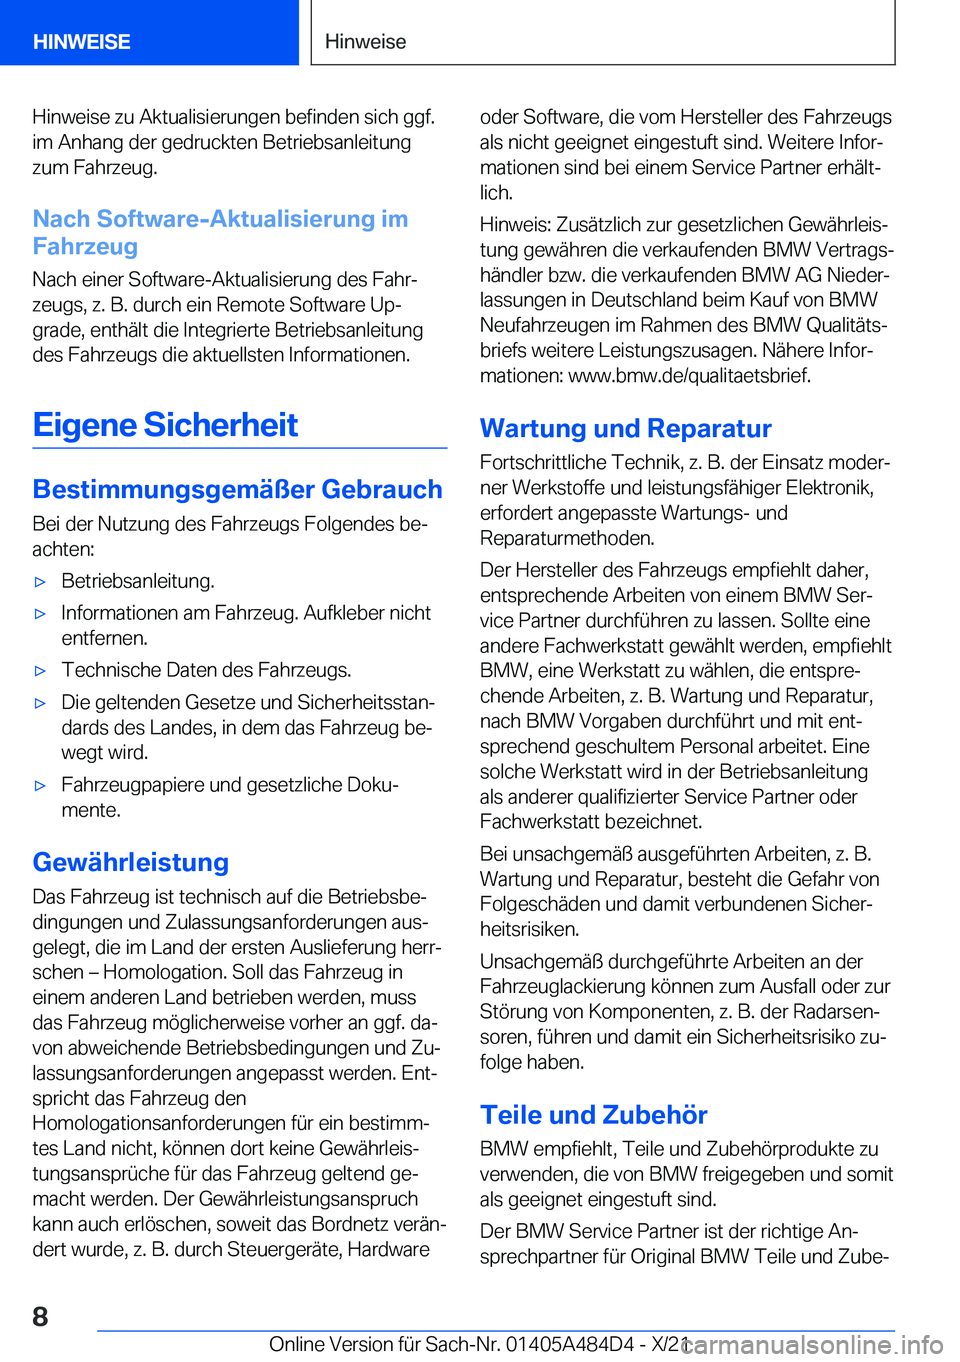 BMW 7 SERIES 2022  Betriebsanleitungen (in German) �H�i�n�w�e�i�s�e��z�u��A�k�t�u�a�l�i�s�i�e�r�u�n�g�e�n��b�e�f�i�n�d�e�n��s�i�c�h��g�g�f�.�i�m��A�n�h�a�n�g��d�e�r��g�e�d�r�u�c�k�t�e�n��B�e�t�r�i�e�b�s�a�n�l�e�i�t�u�n�g�z�u�m��F�a�h�r�z�e�u